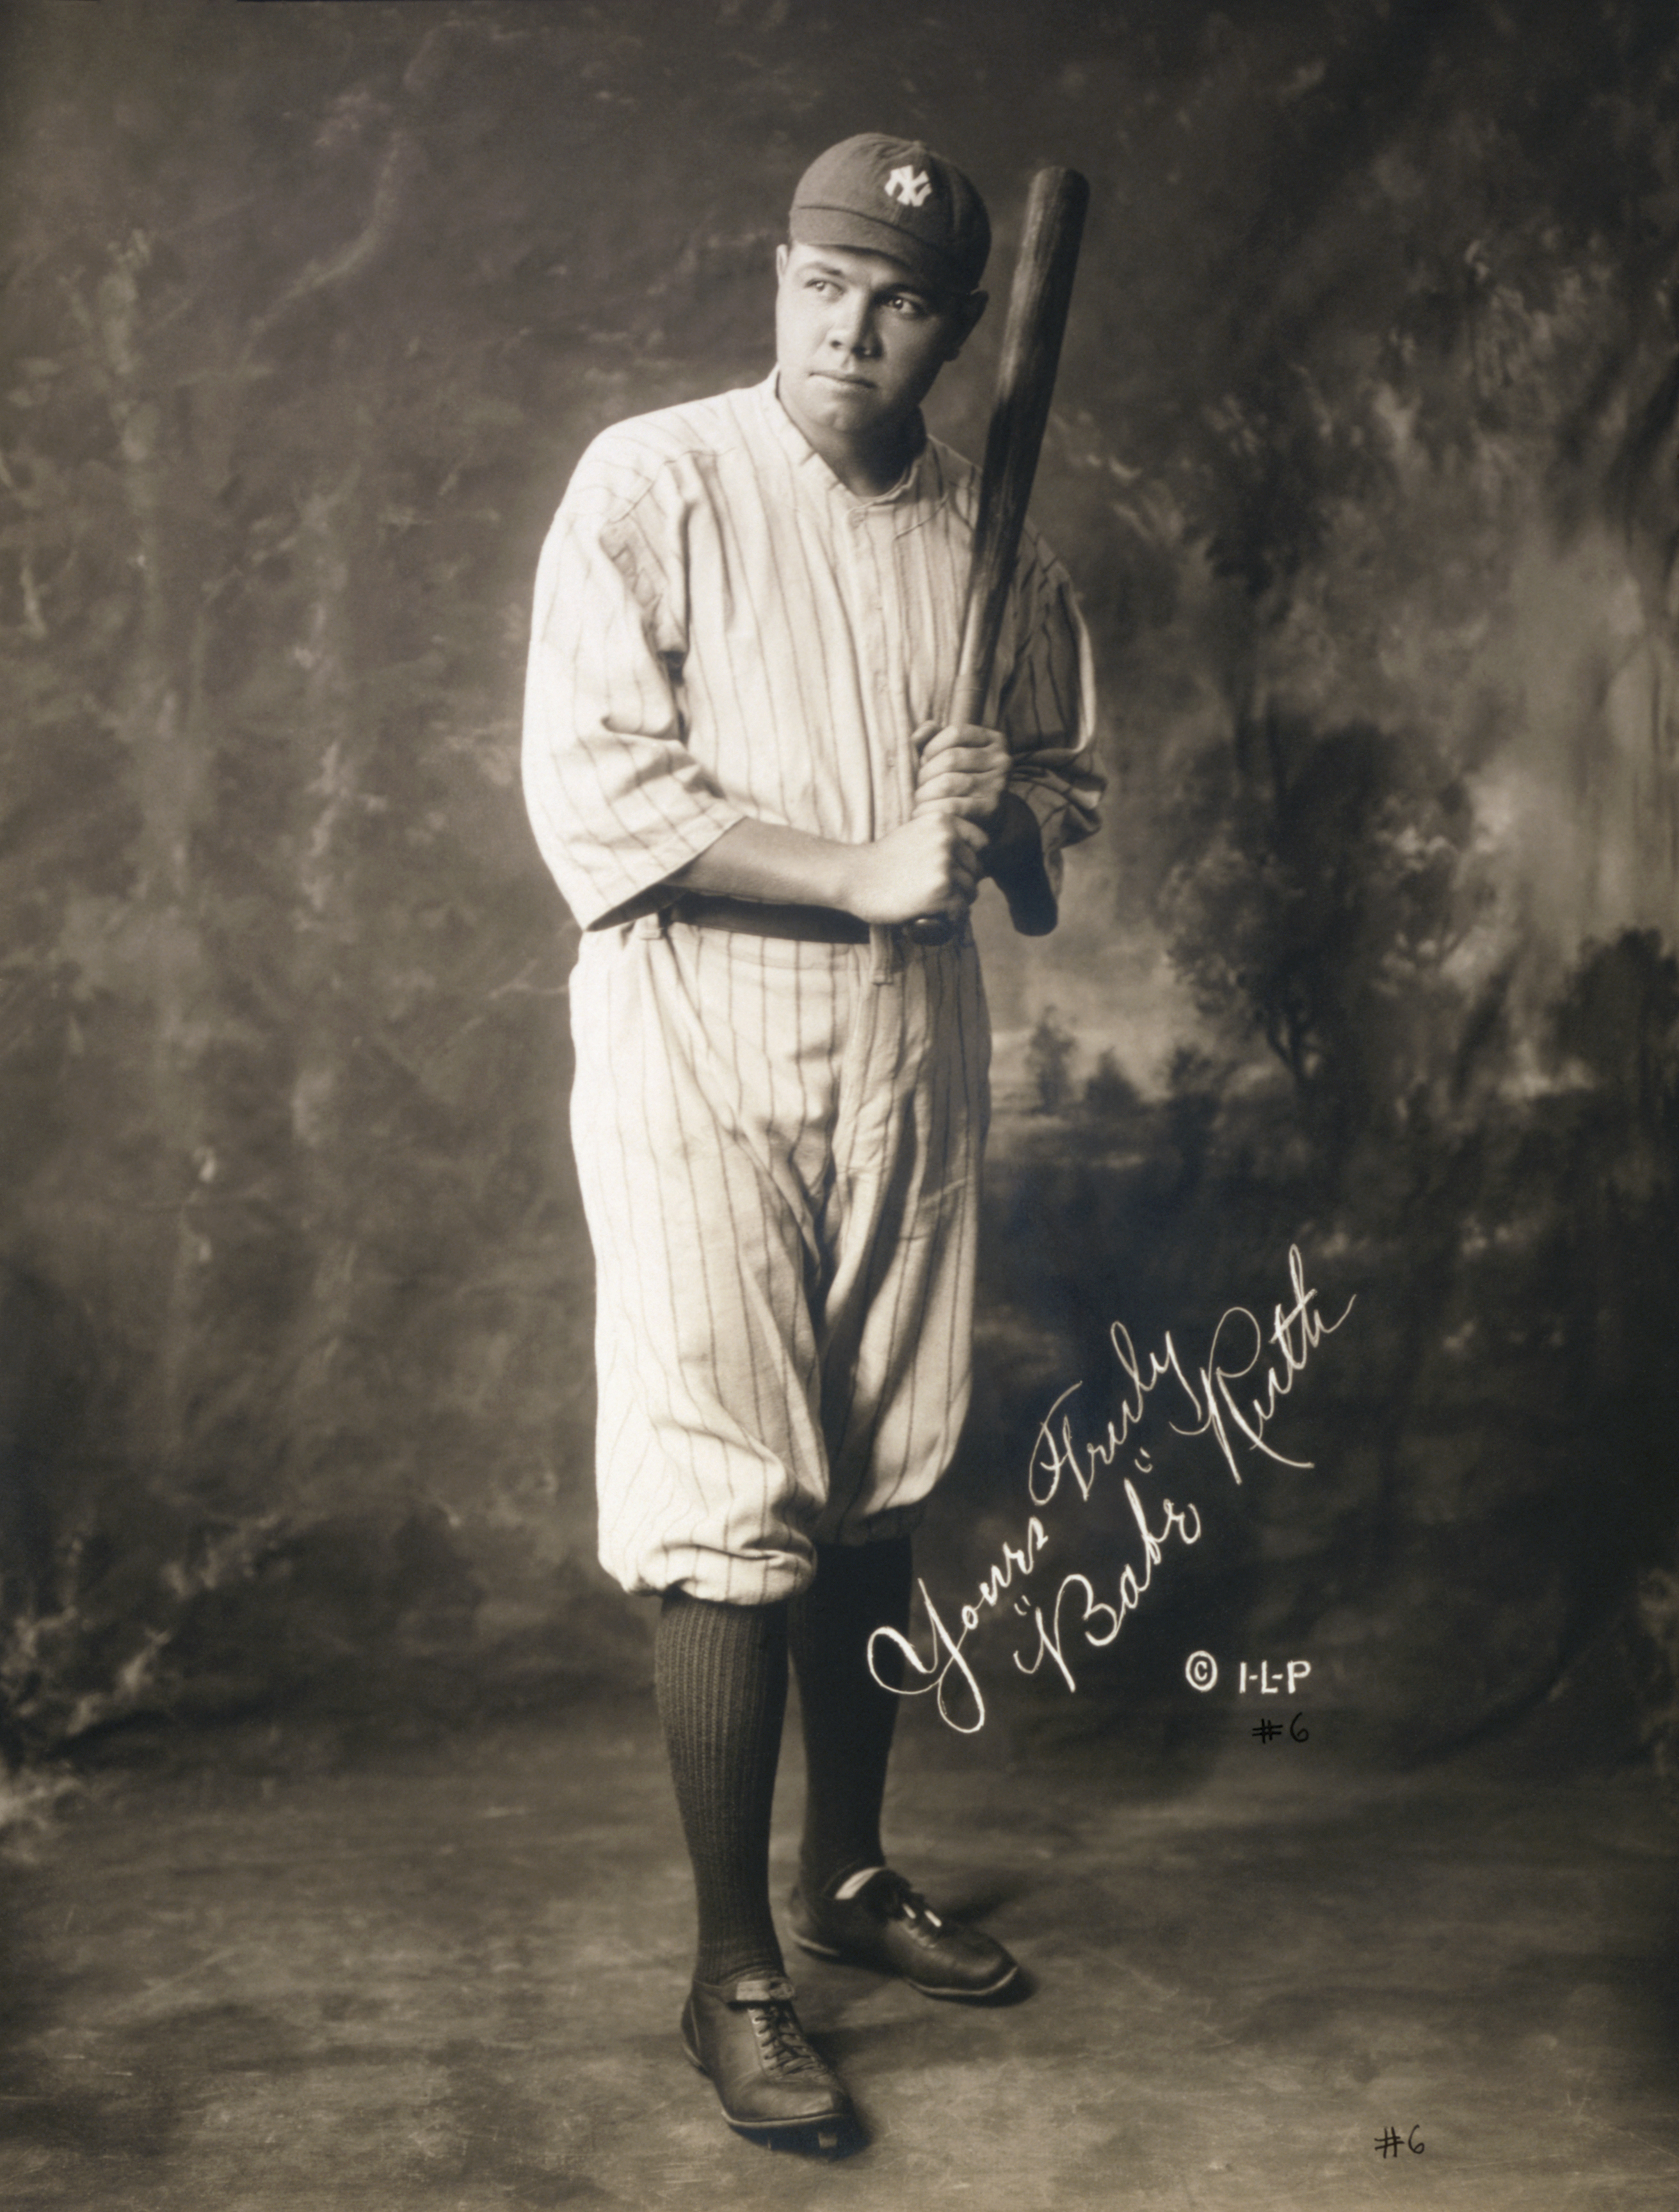  Babe Ruths biografi